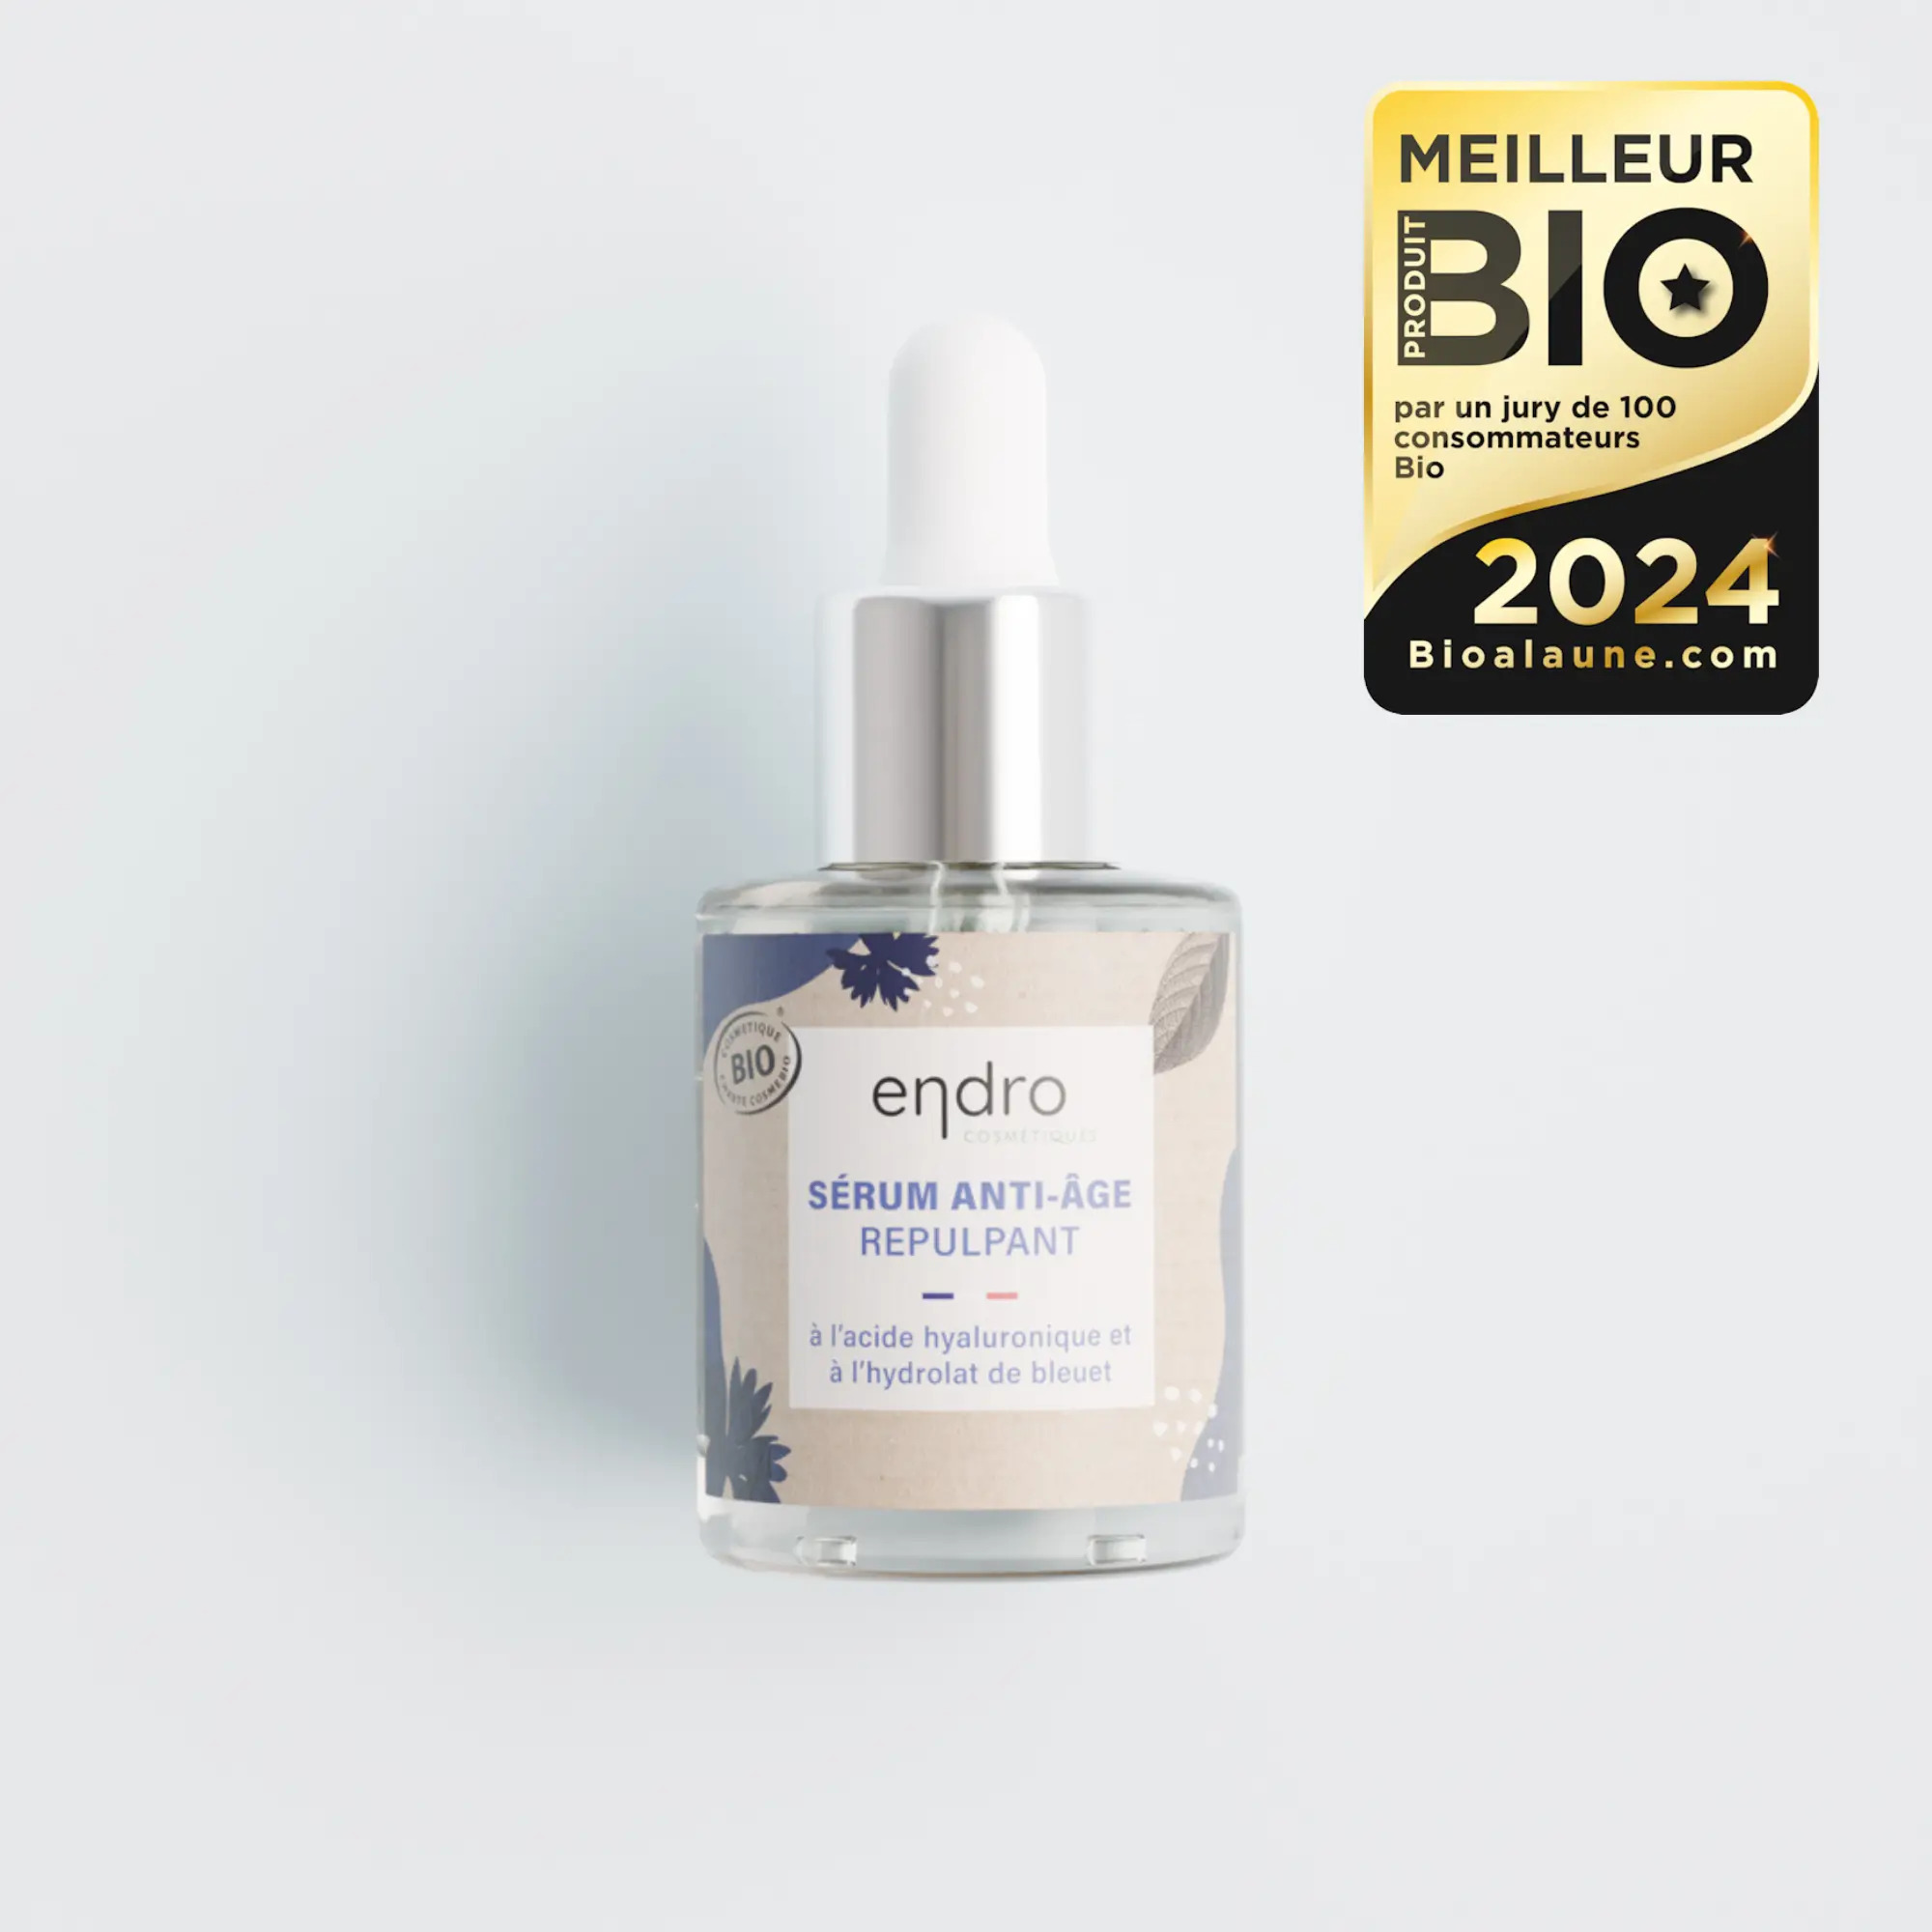 serum-anti-age-repulpant-endo-clean-cosmetiques-meilleur-serum-bio